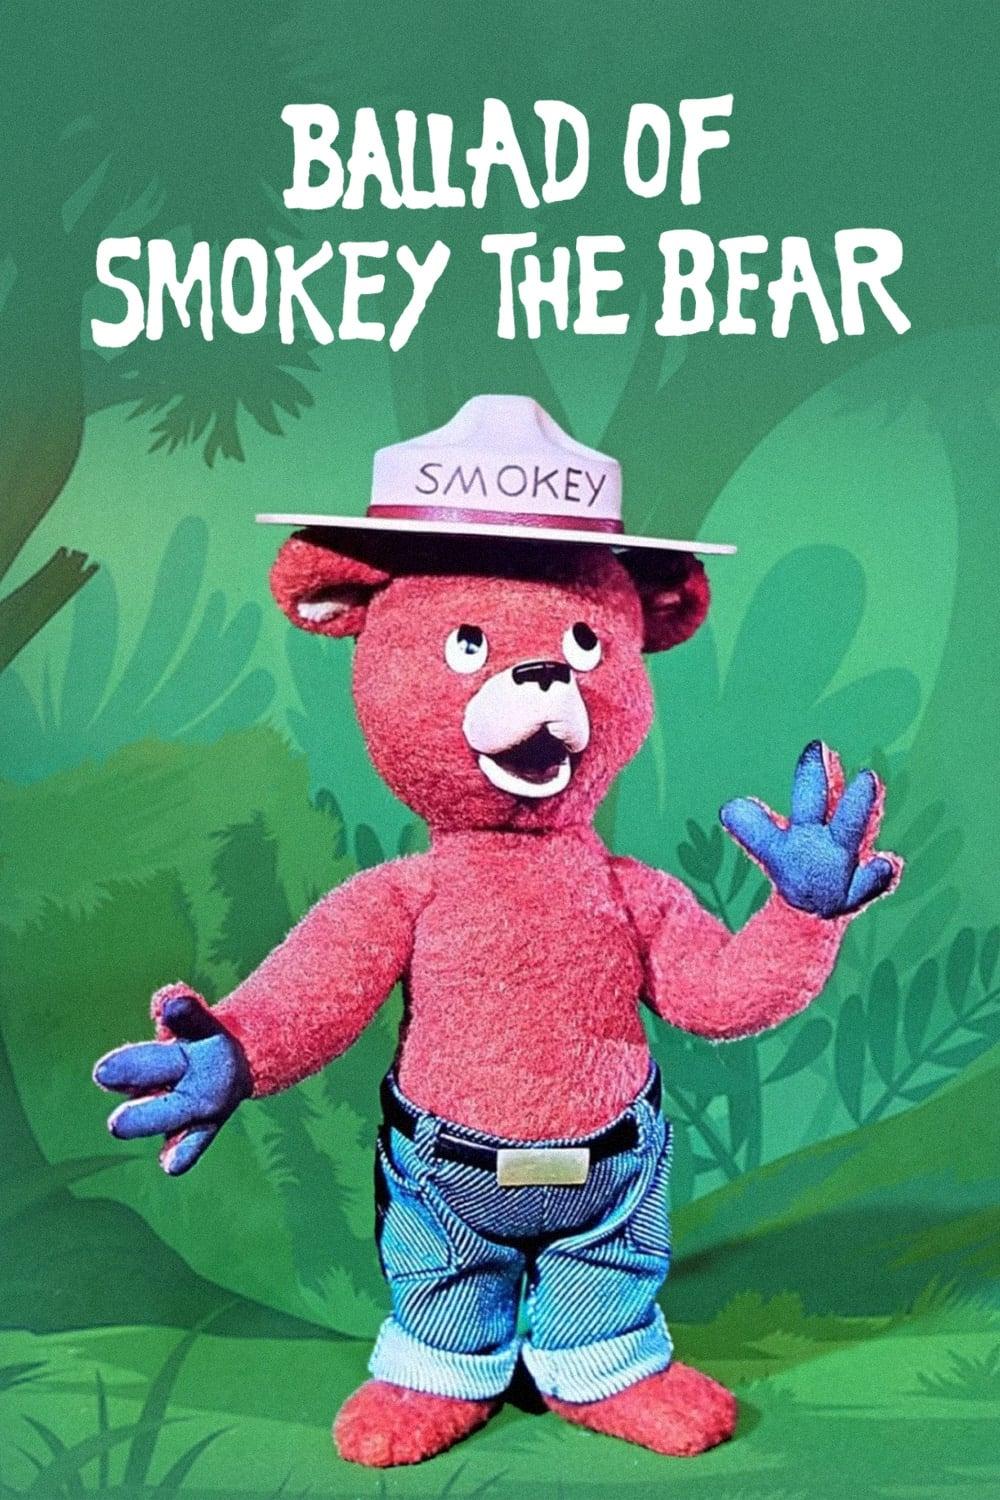 The Ballad of Smokey the Bear poster